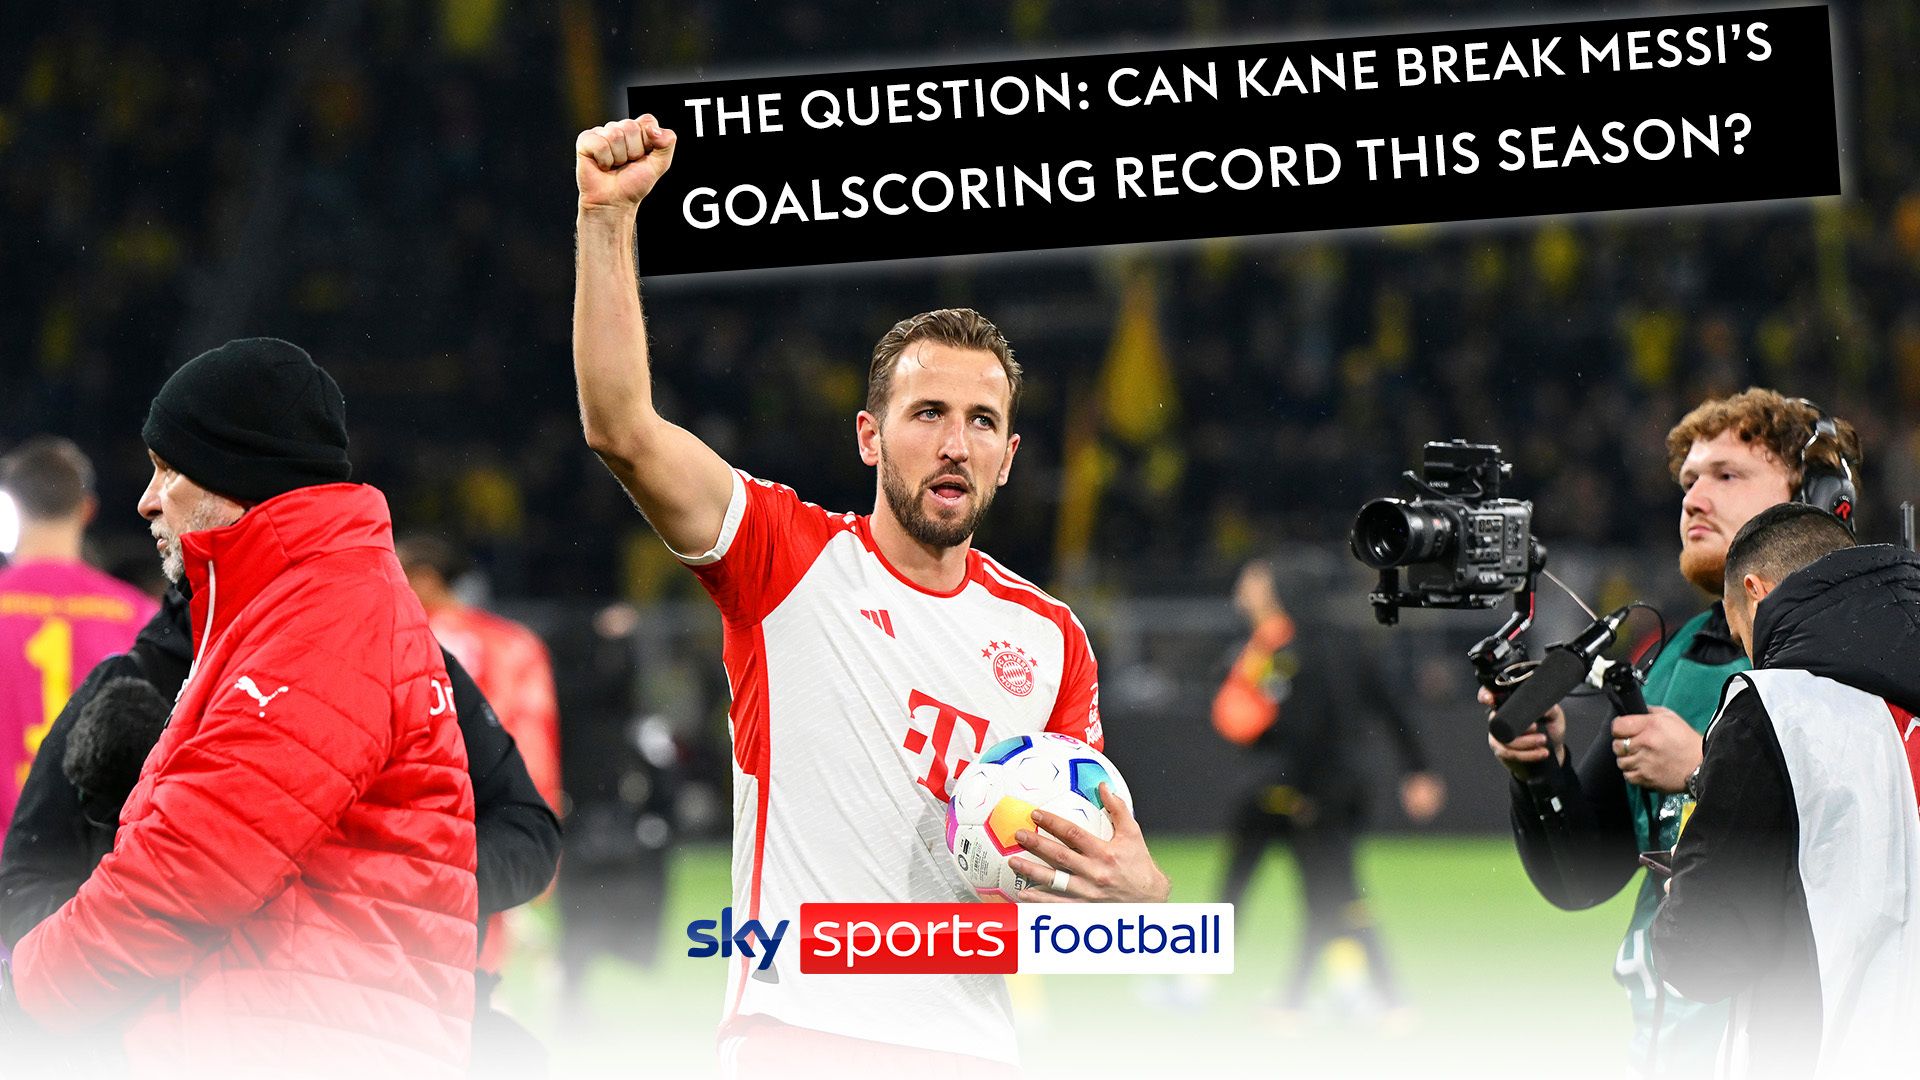 The Question: Will Kane break Messi's goalscoring record this season?